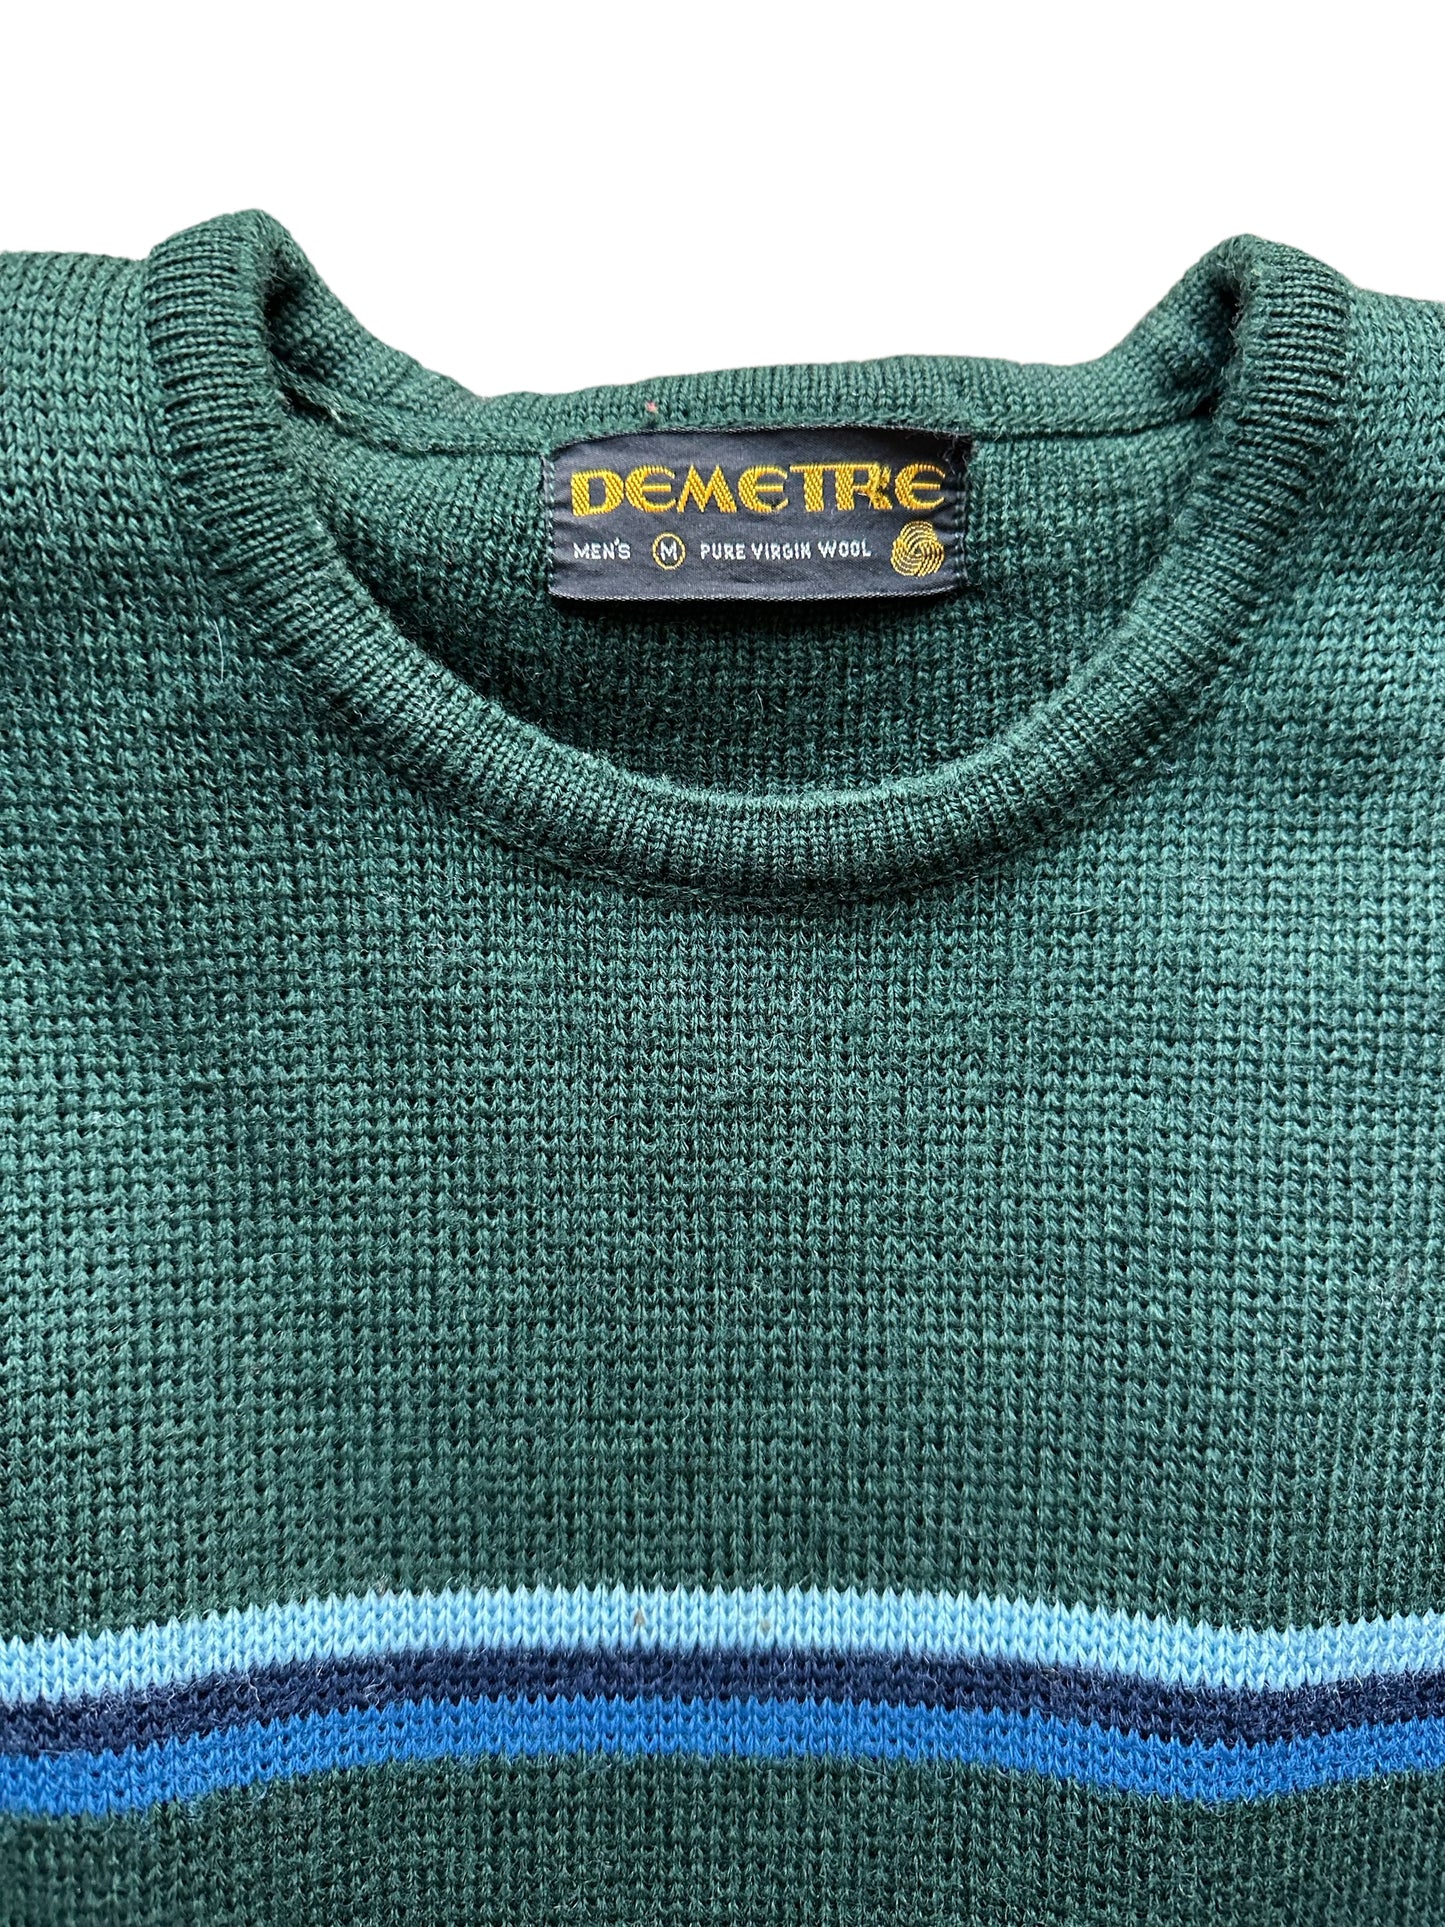 Tag View of Vintage Demetre Wool Ski Sweater SZ M |  Vintage Sweaters Seattle | Barn Owl Vintage Seattle